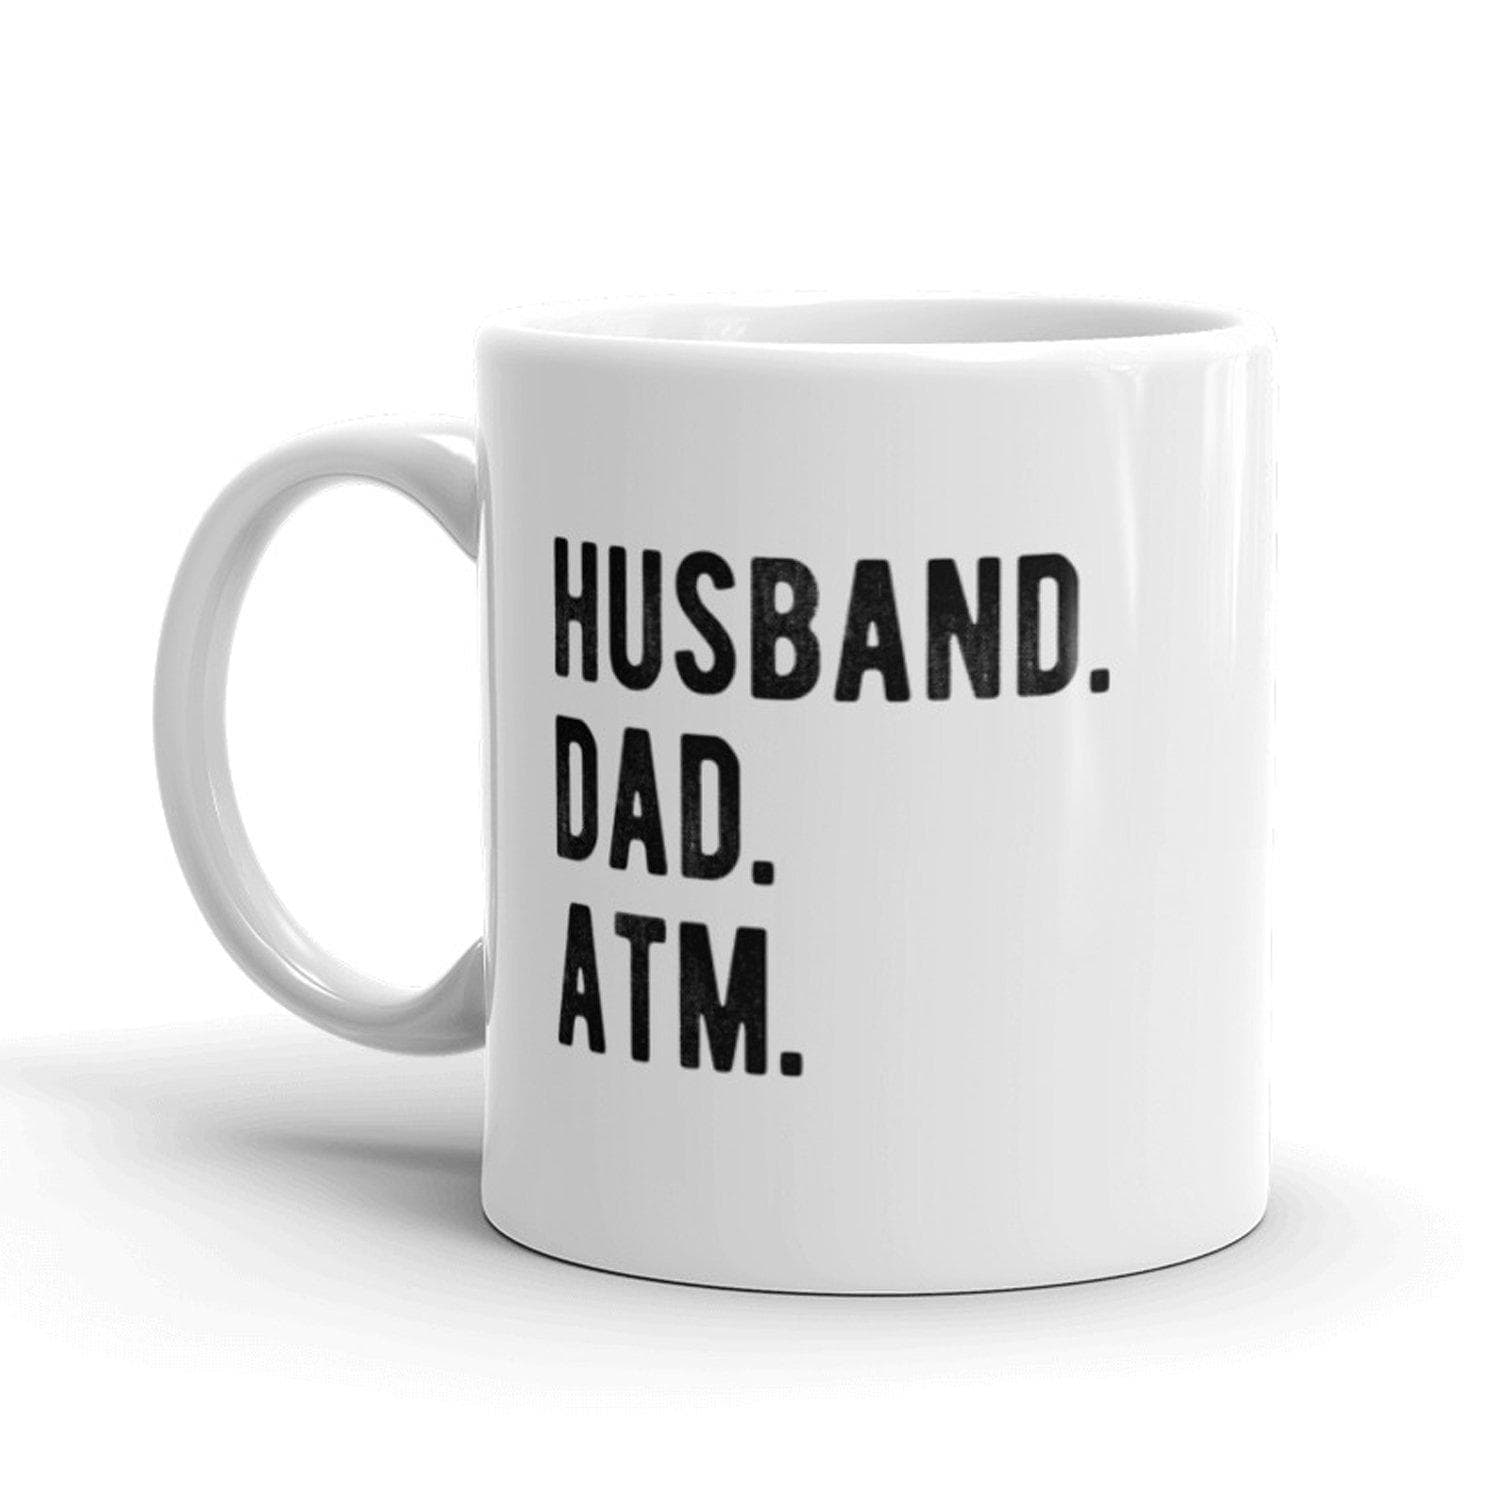 Husband Dad ATM Mug - Crazy Dog T-Shirts